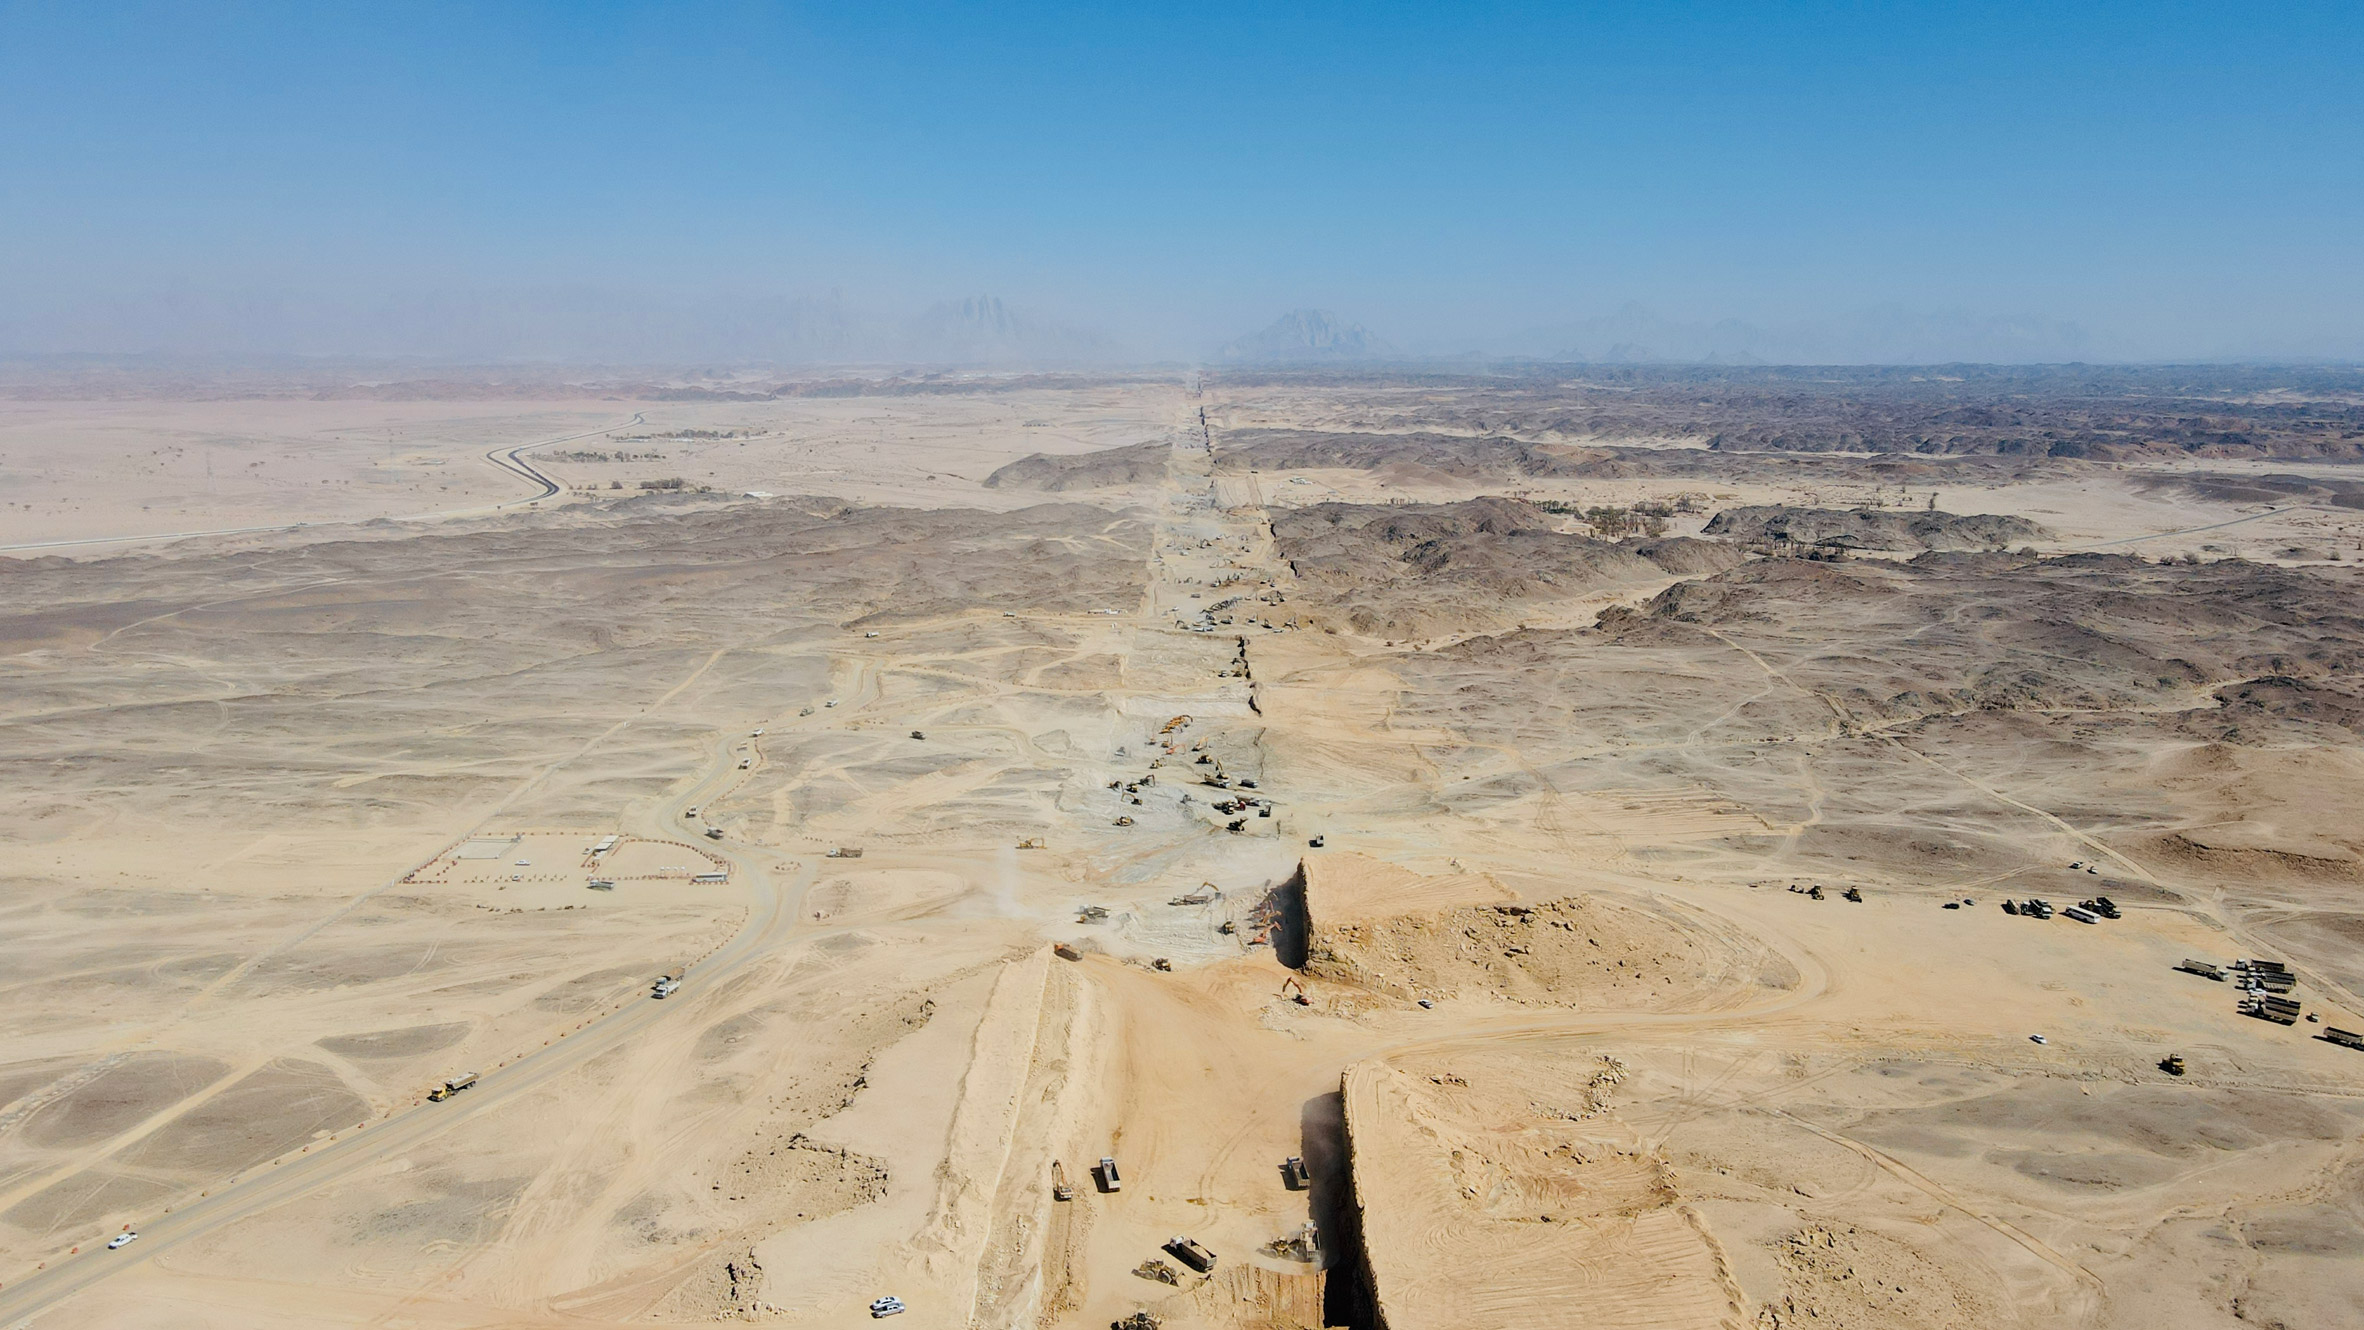 The Line megacity under construction in Saudi Arabia